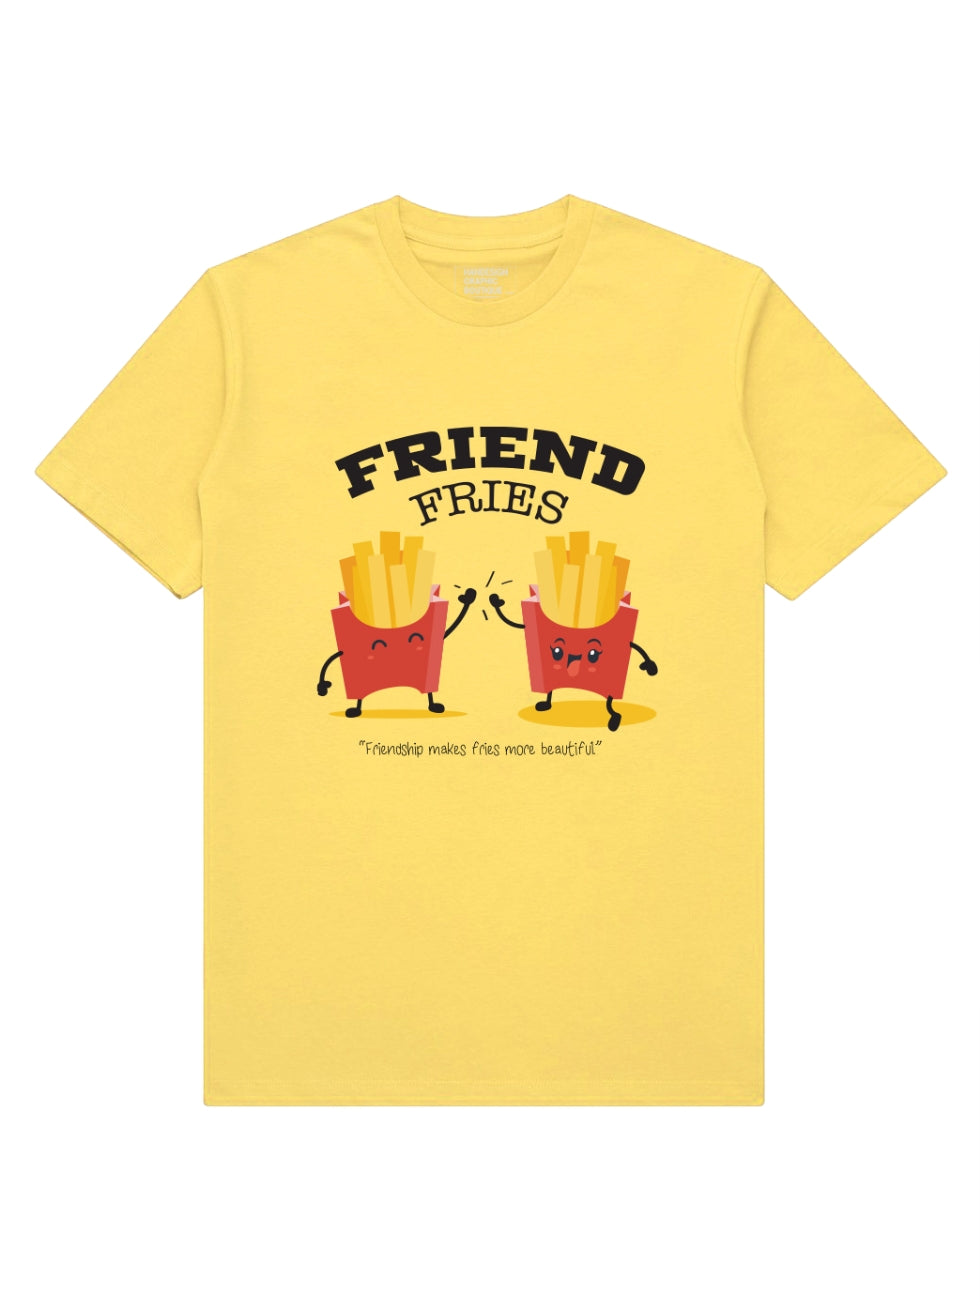 Friend fries